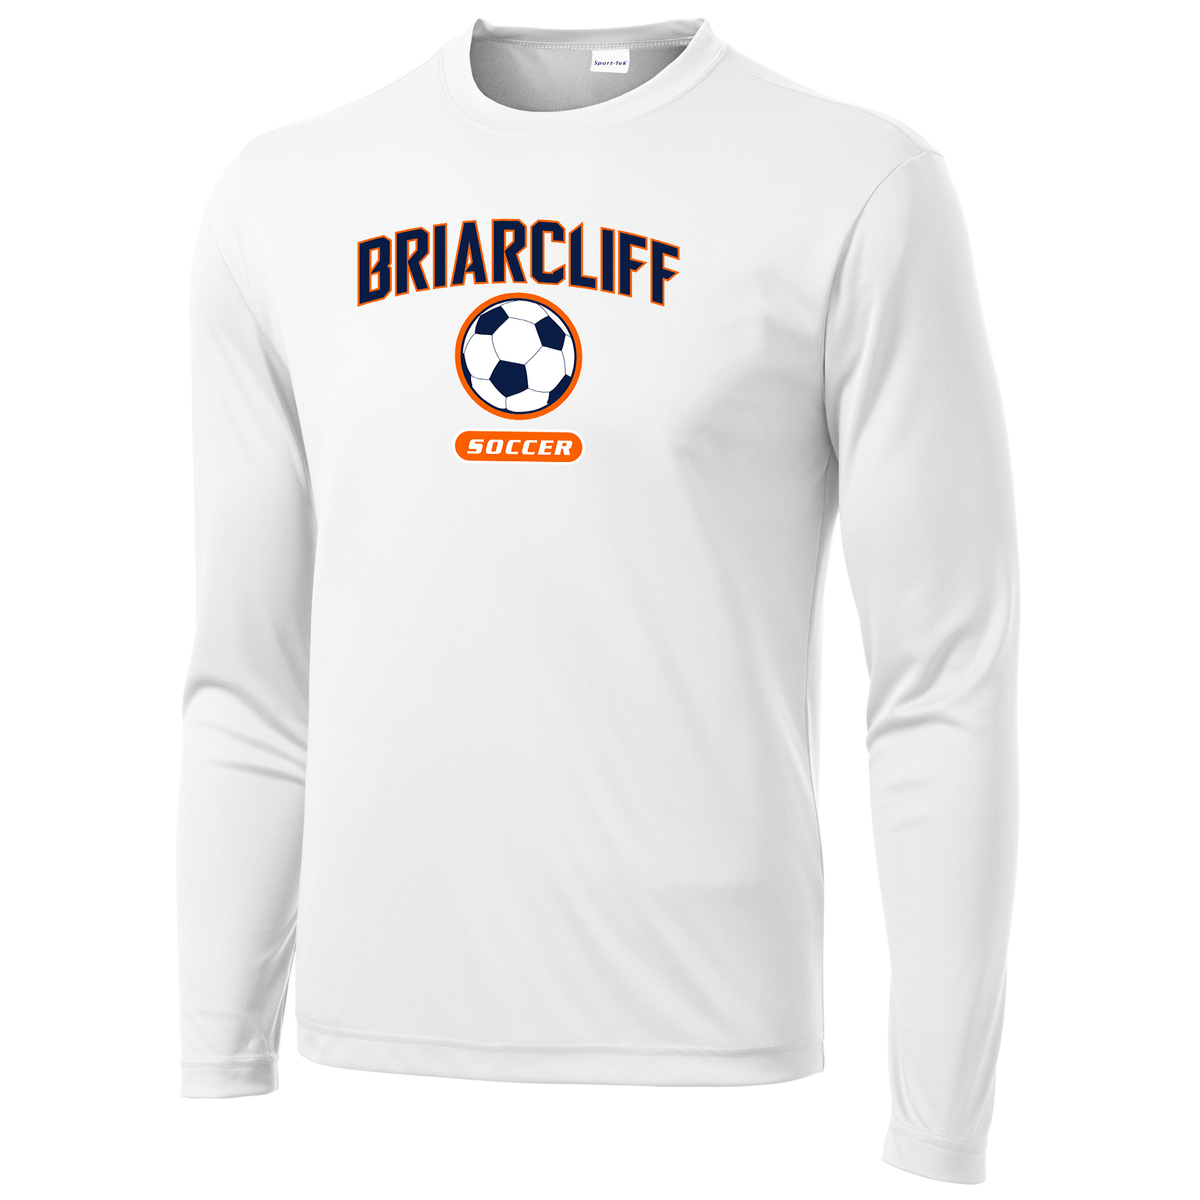 Briarcliff Soccer Long Sleeve Performance Shirt